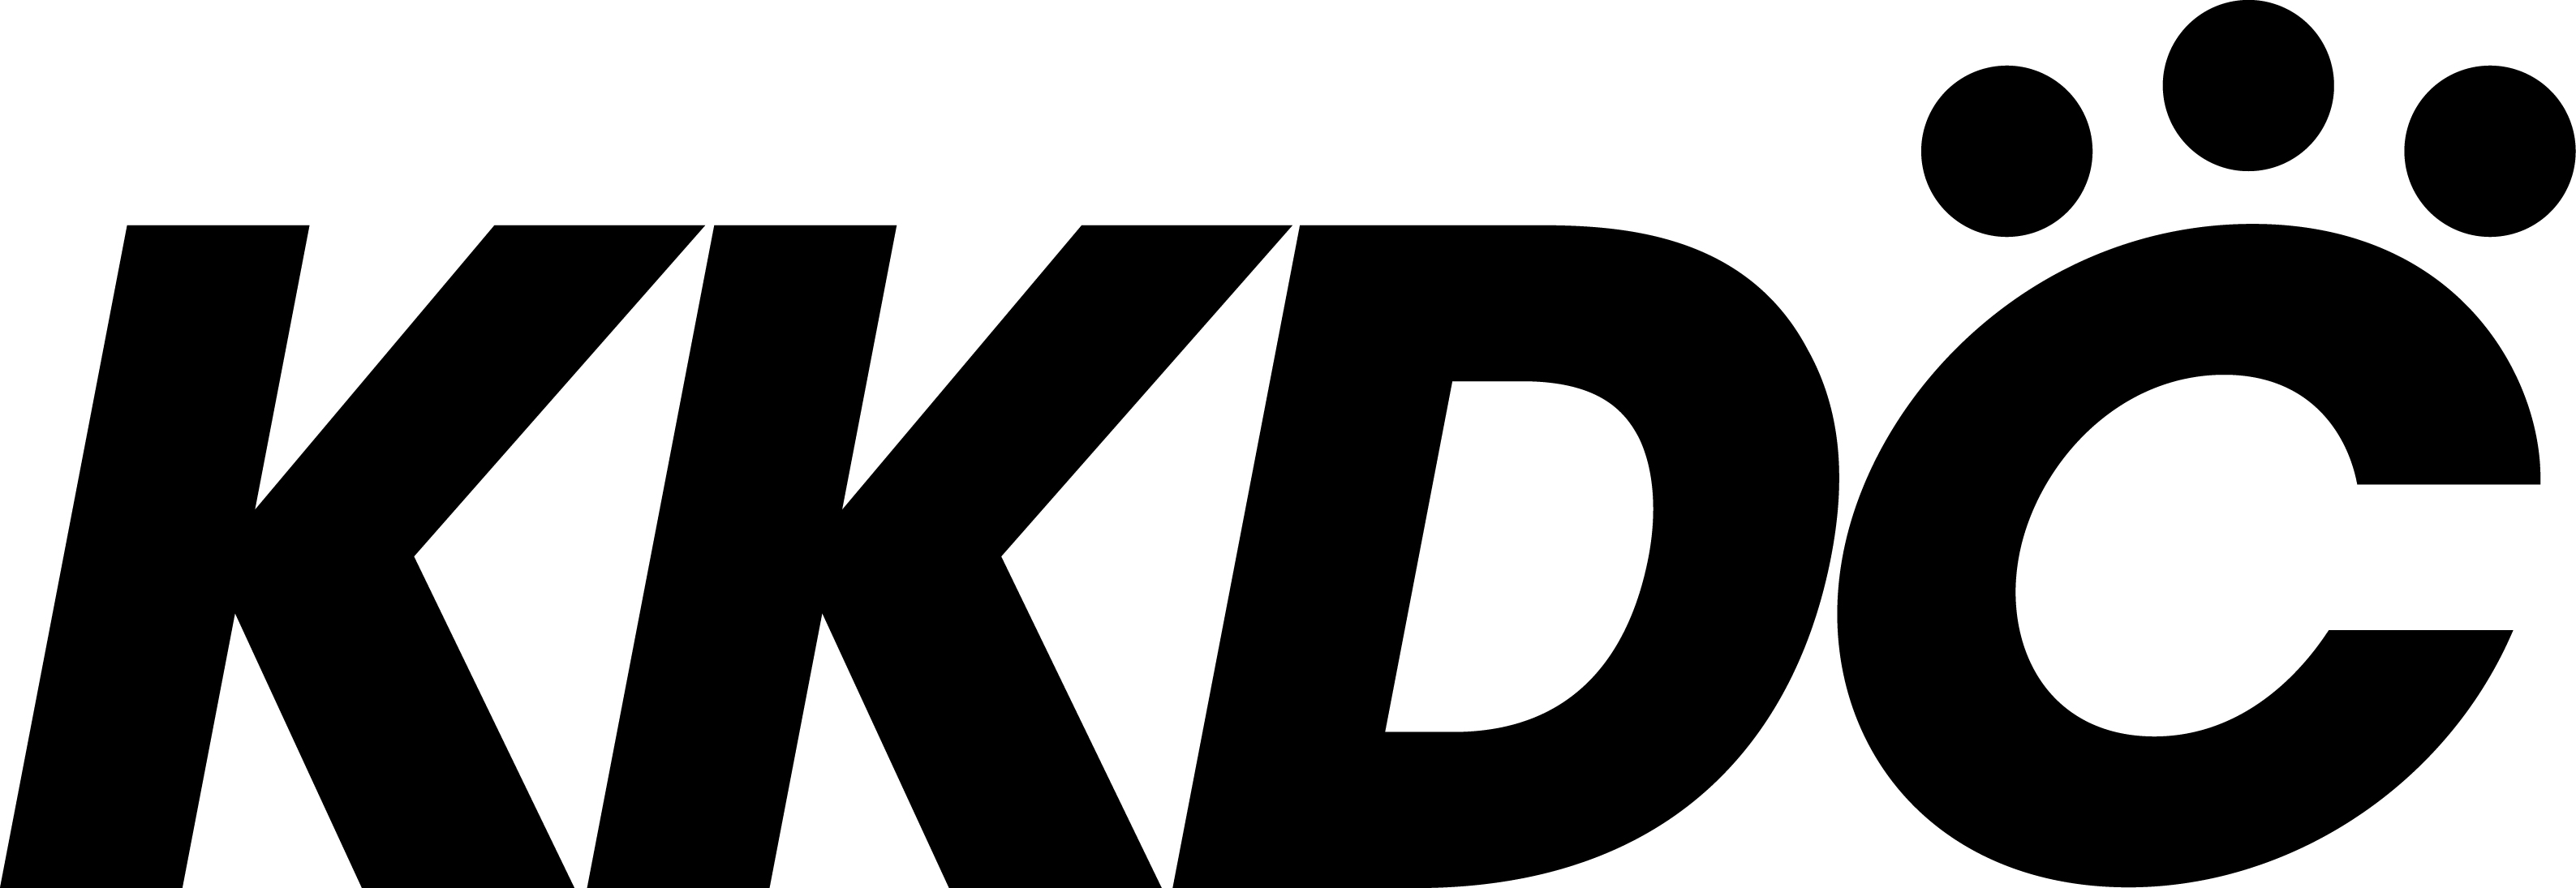 KKDC logo black